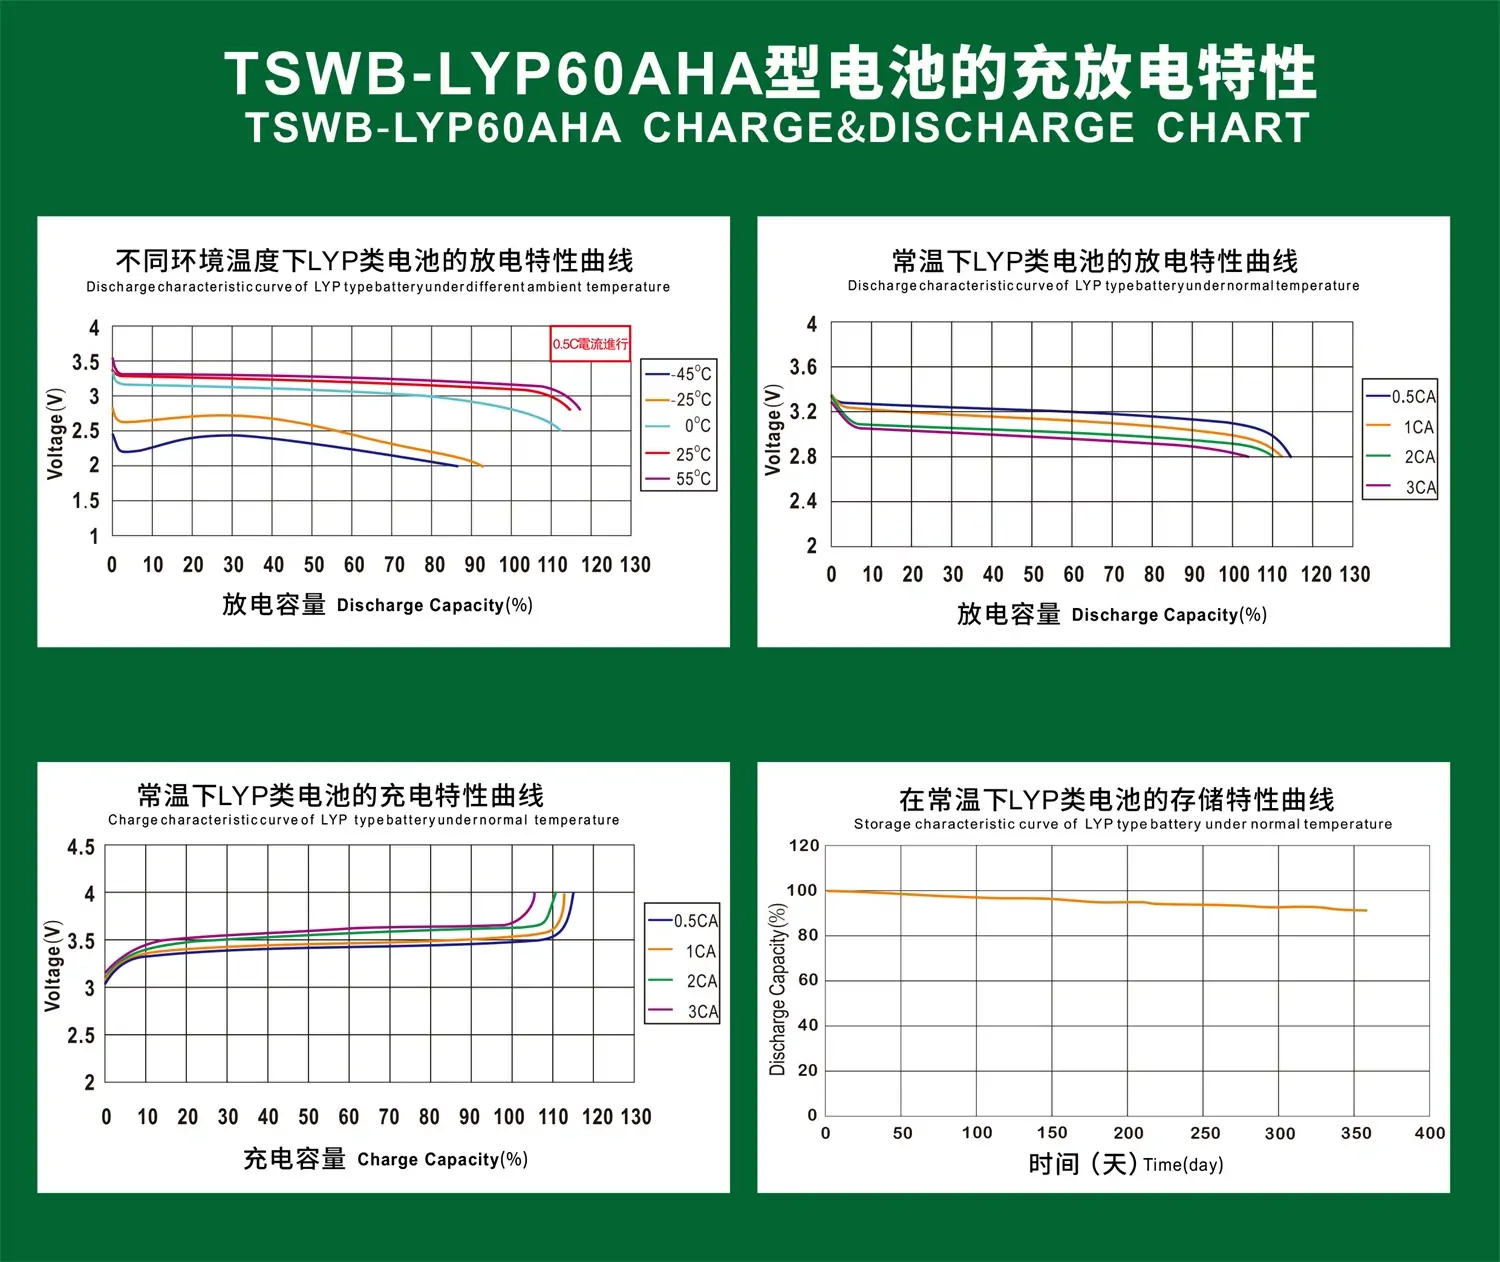 TSWB-LYP60AHA CHARGE&DISCHARGE CHART